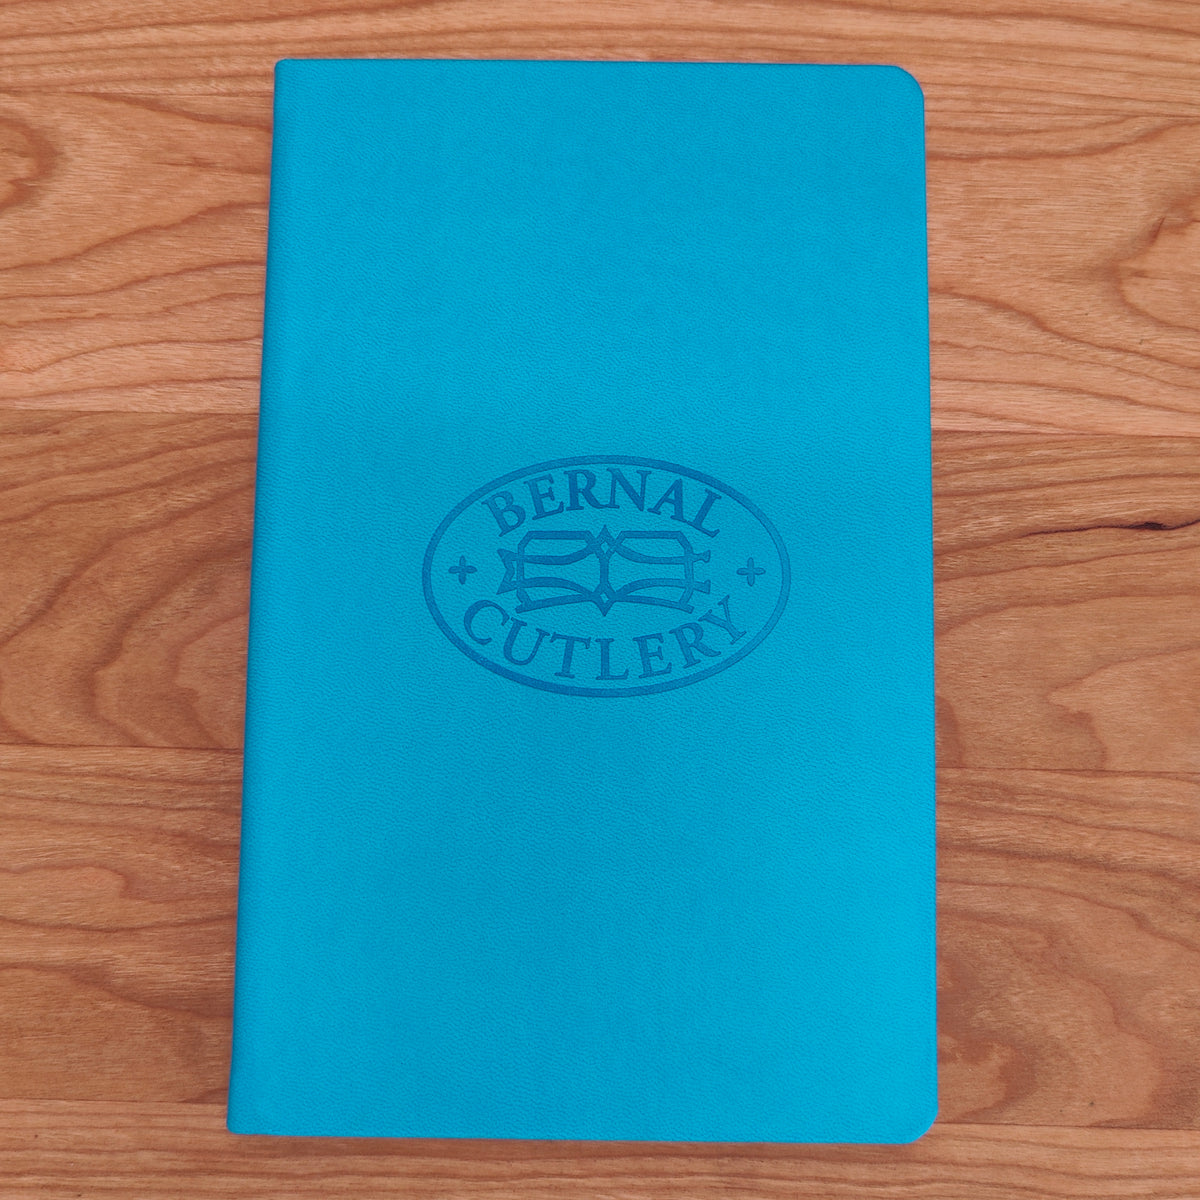 Bernal Cutlery Sky Blue Slim Medium Journal